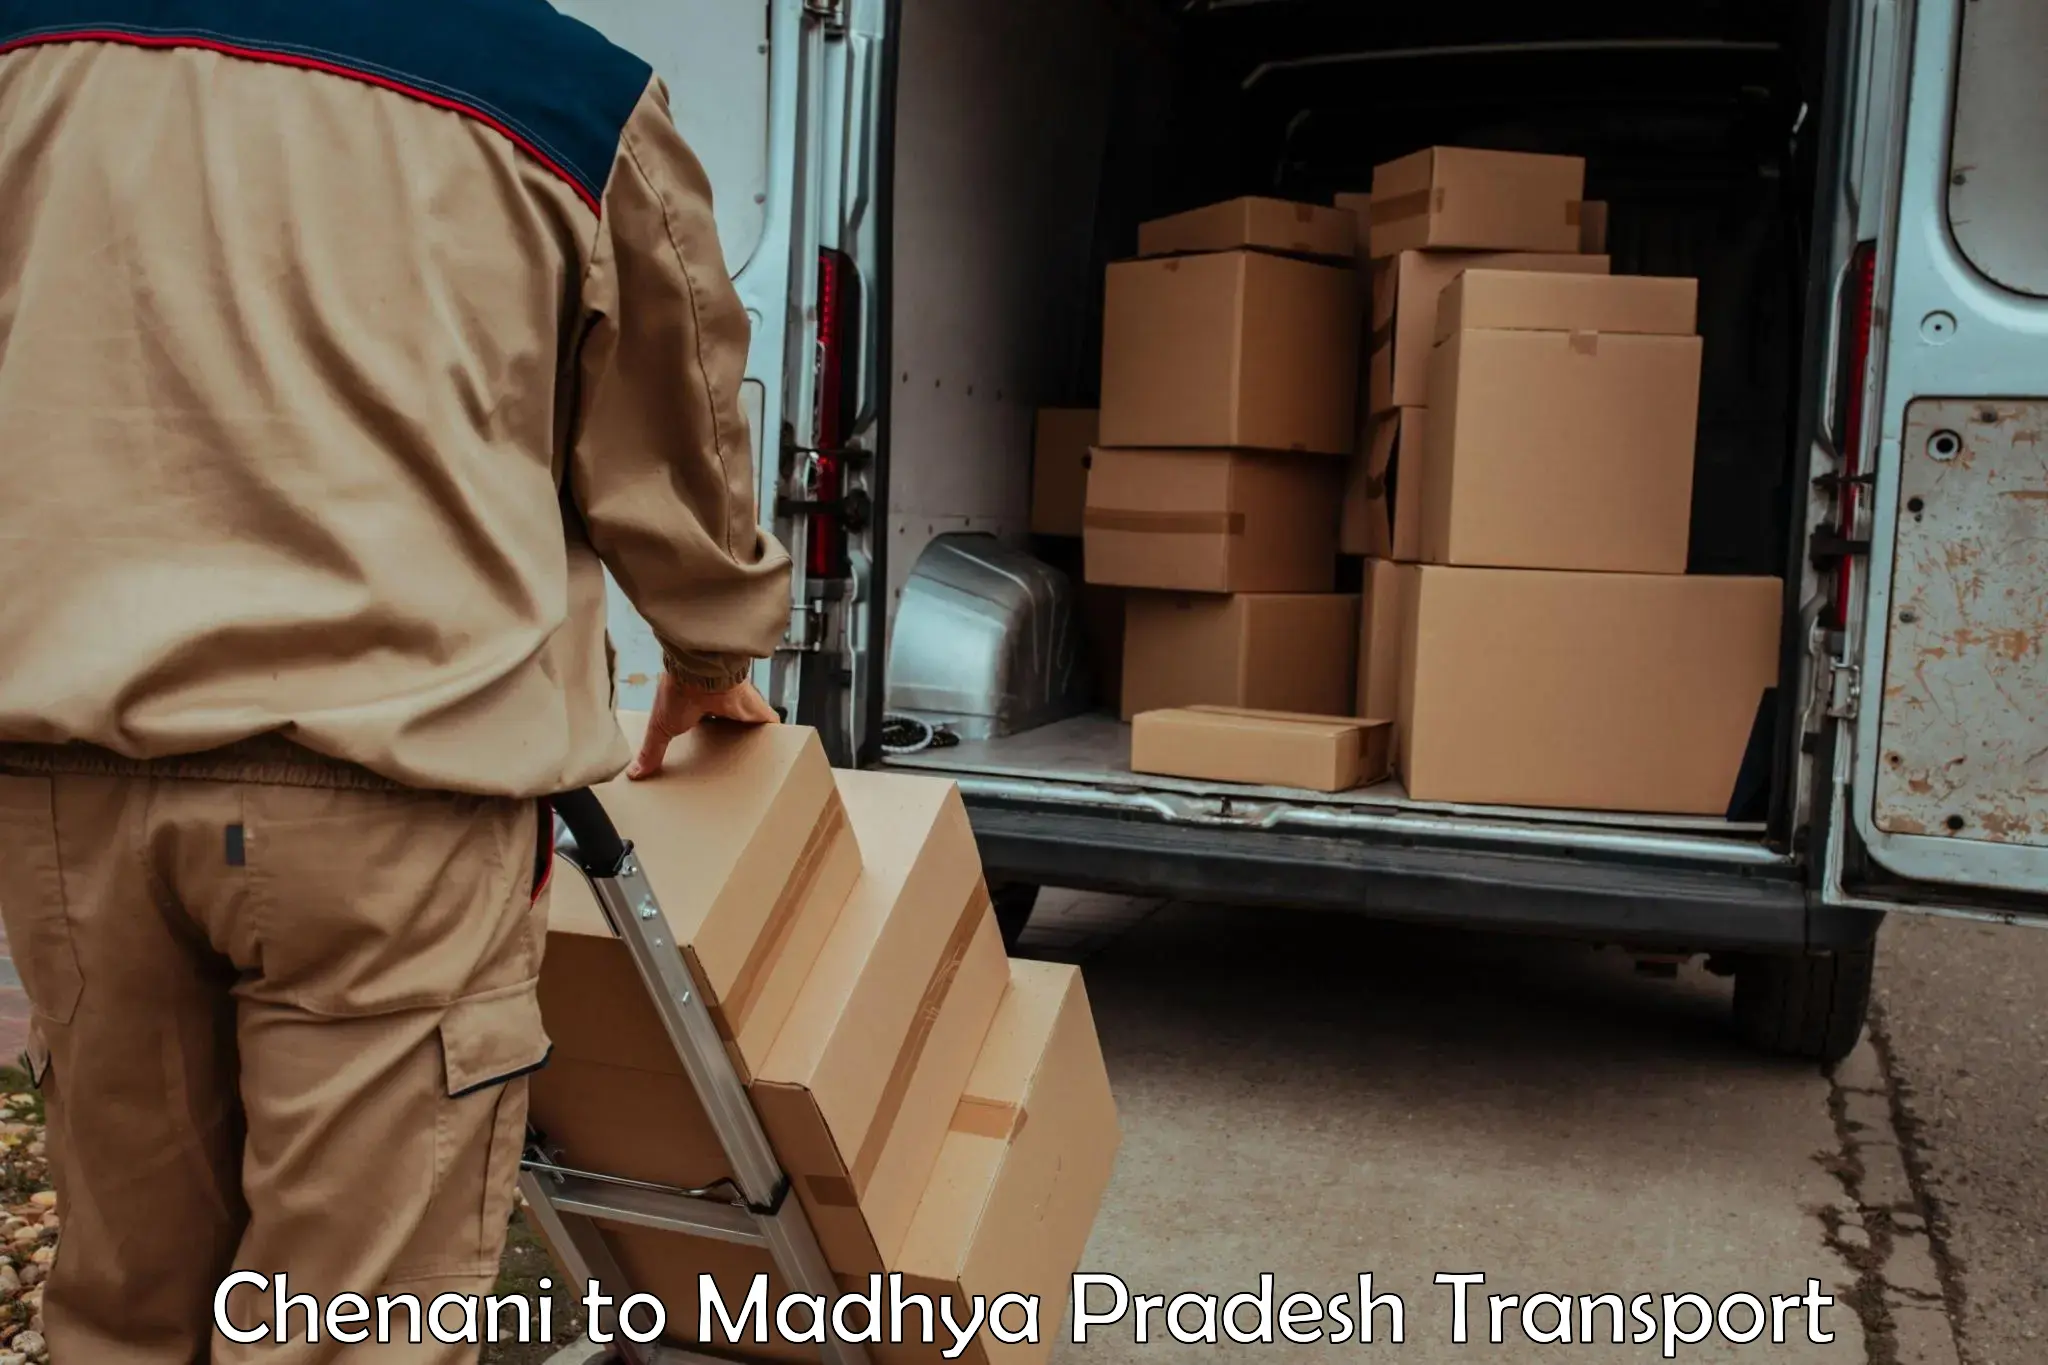 Truck transport companies in India Chenani to Jhabua